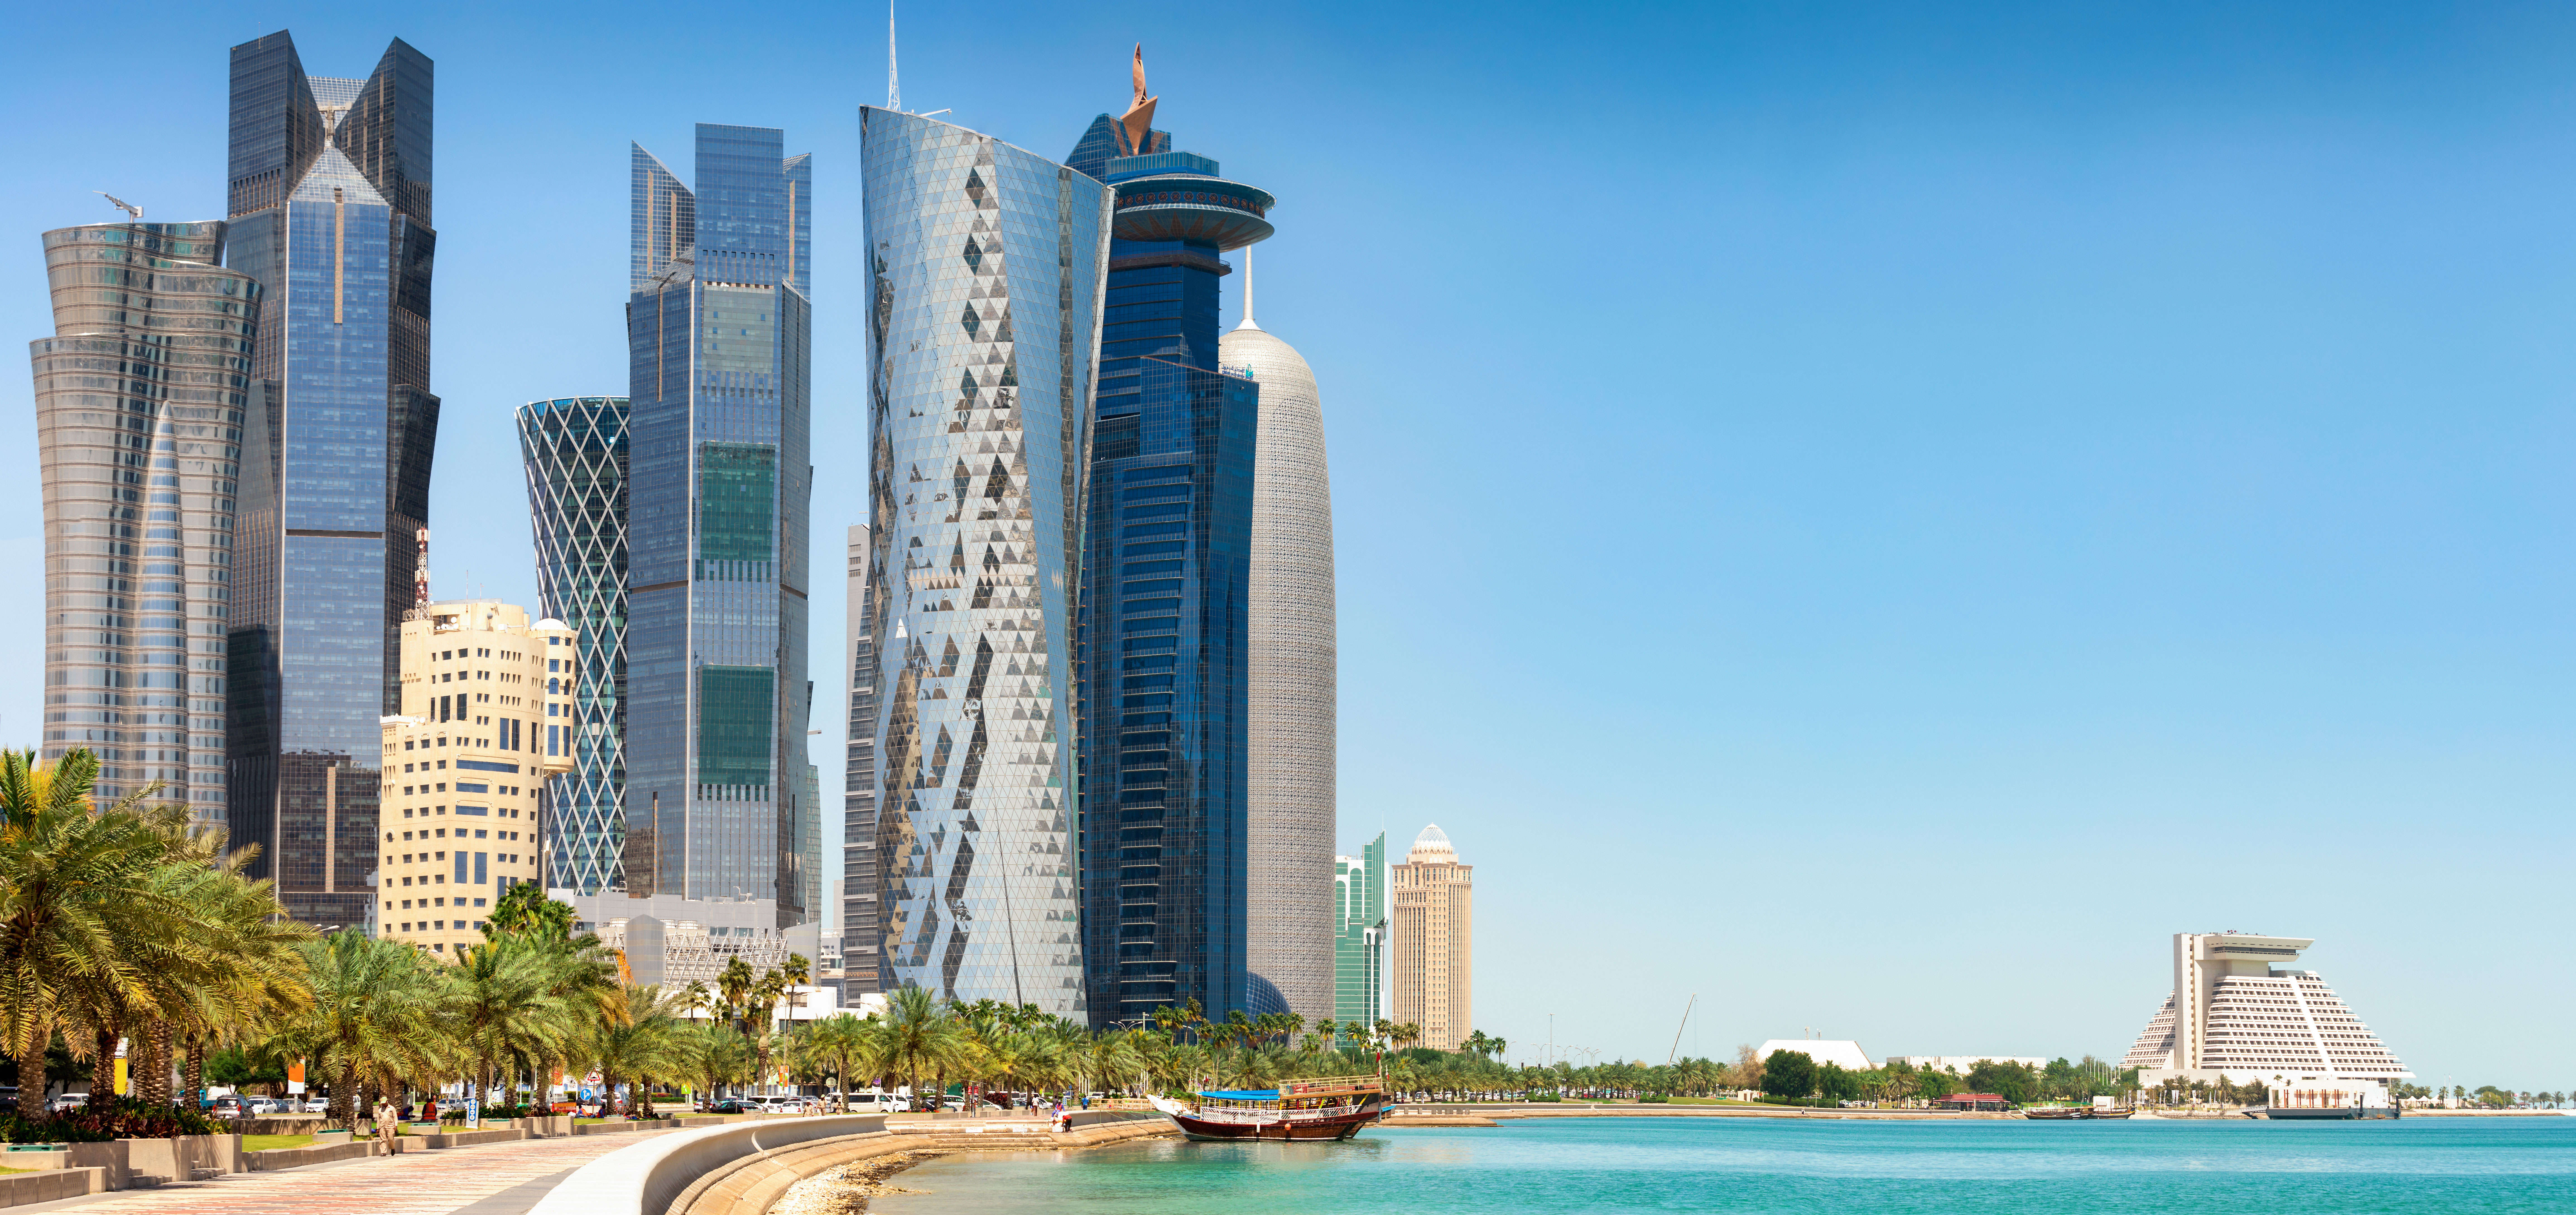 The 7km-long Corniche is Doha’s iconic seaside promenade